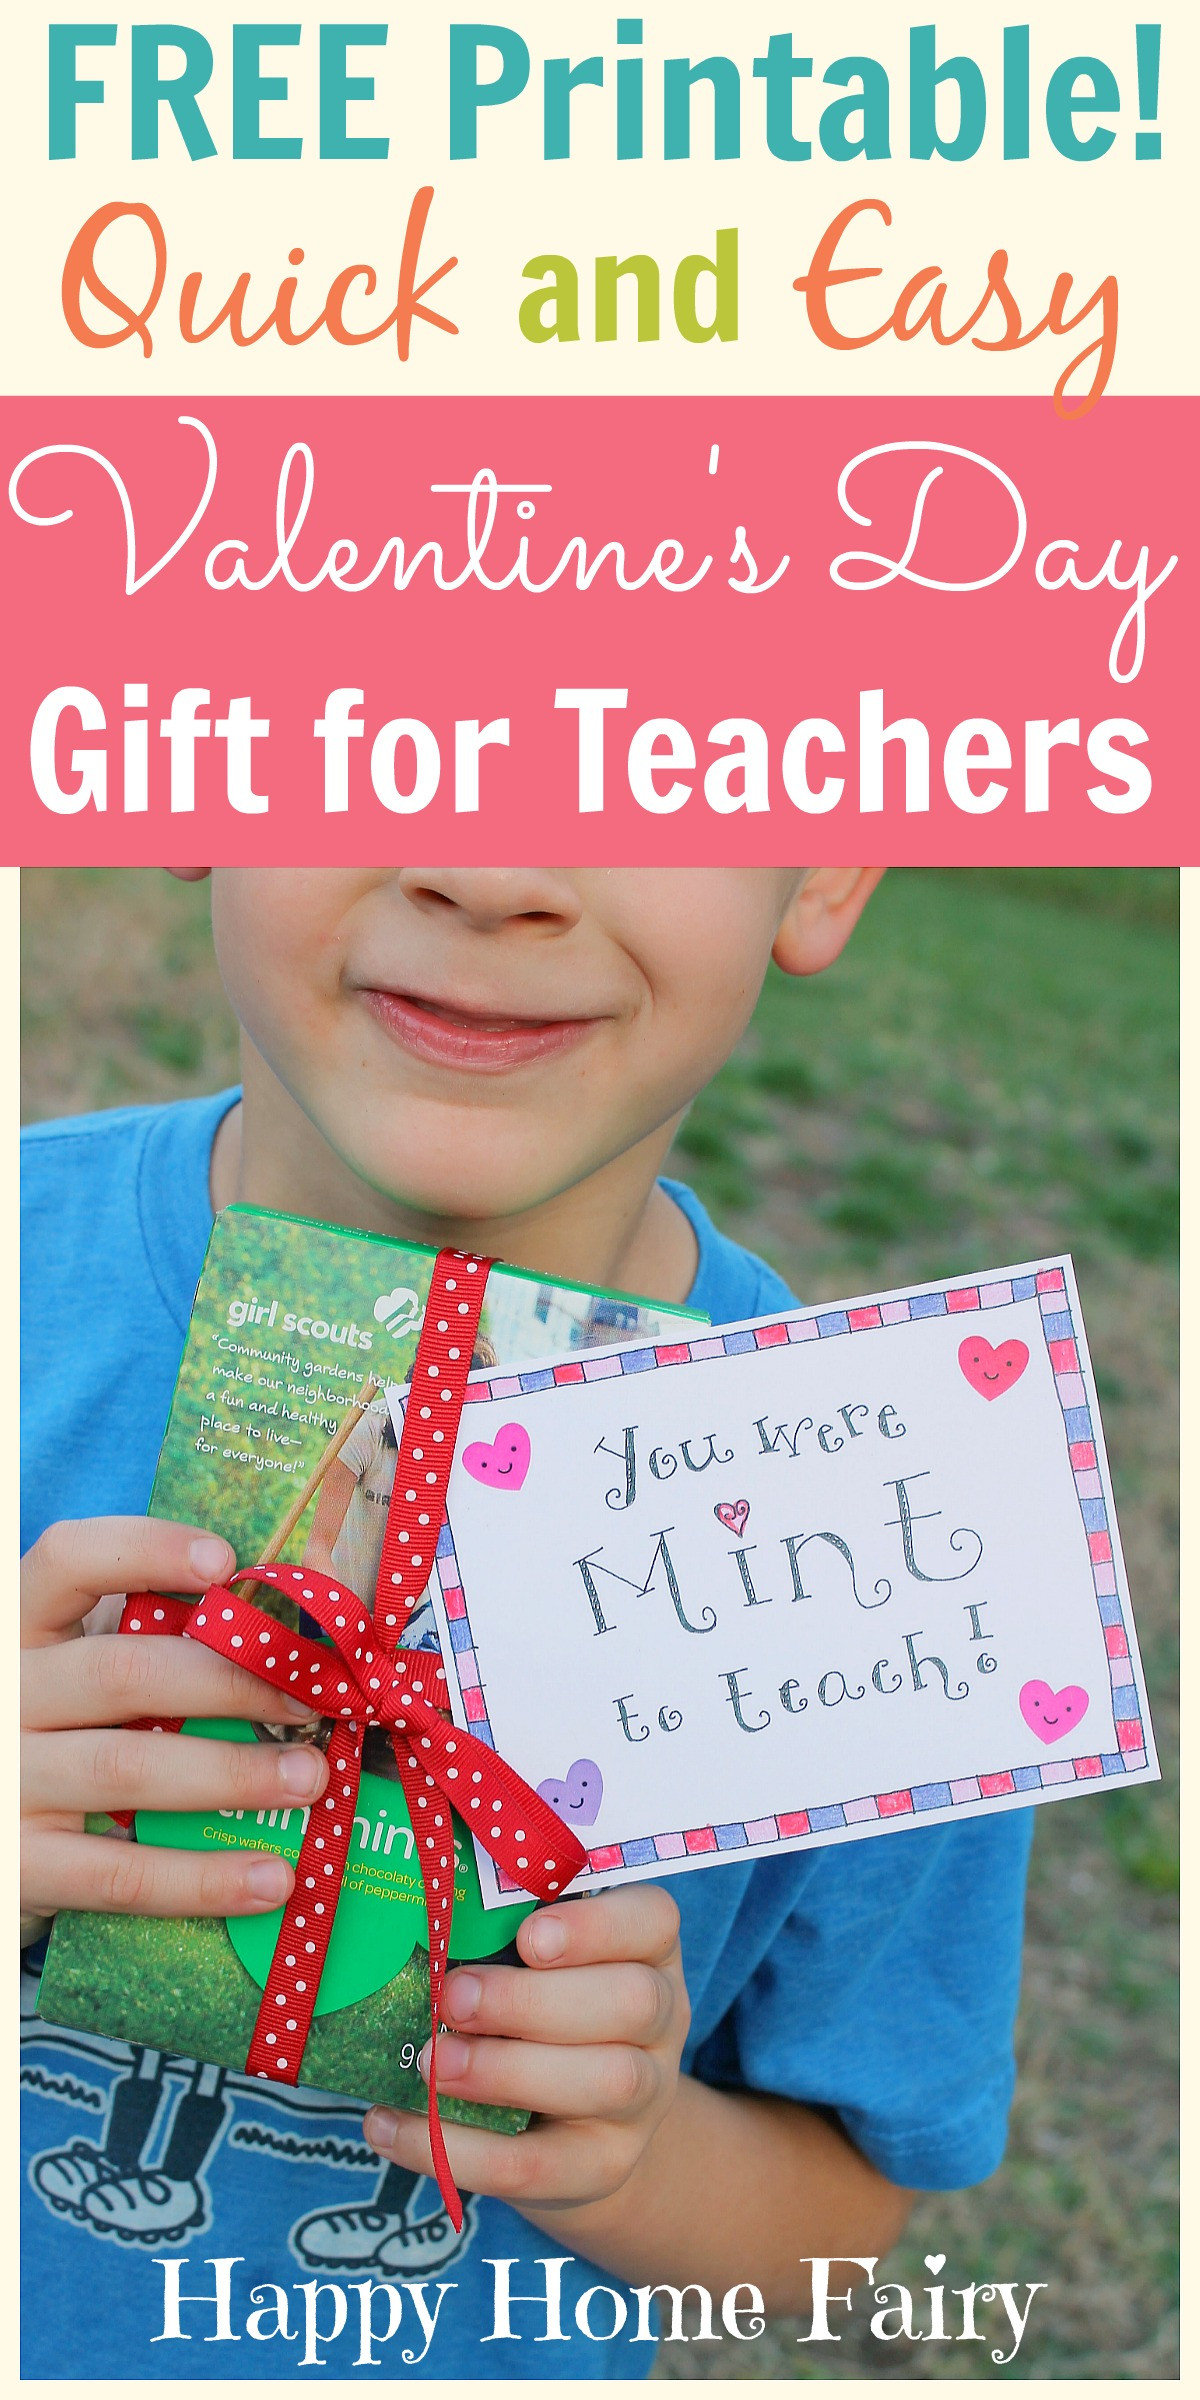 Teacher Valentine'S Day Gift Ideas
 Easy Valentine s Day Gift for Teachers FREE Printable